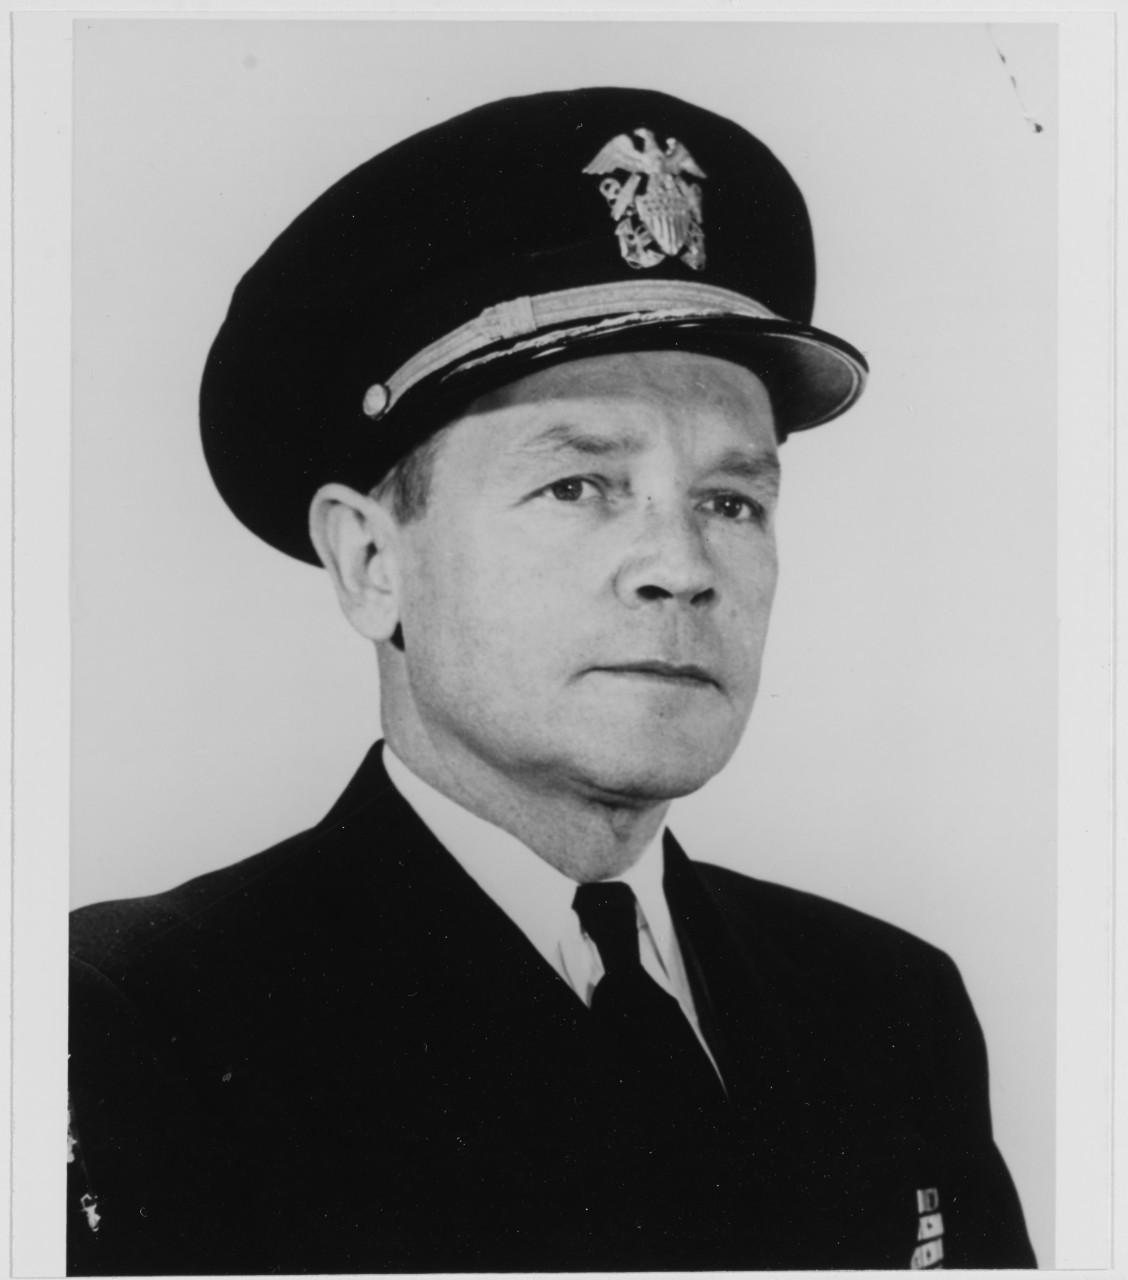 Captain Kenneth P. Letts, USN